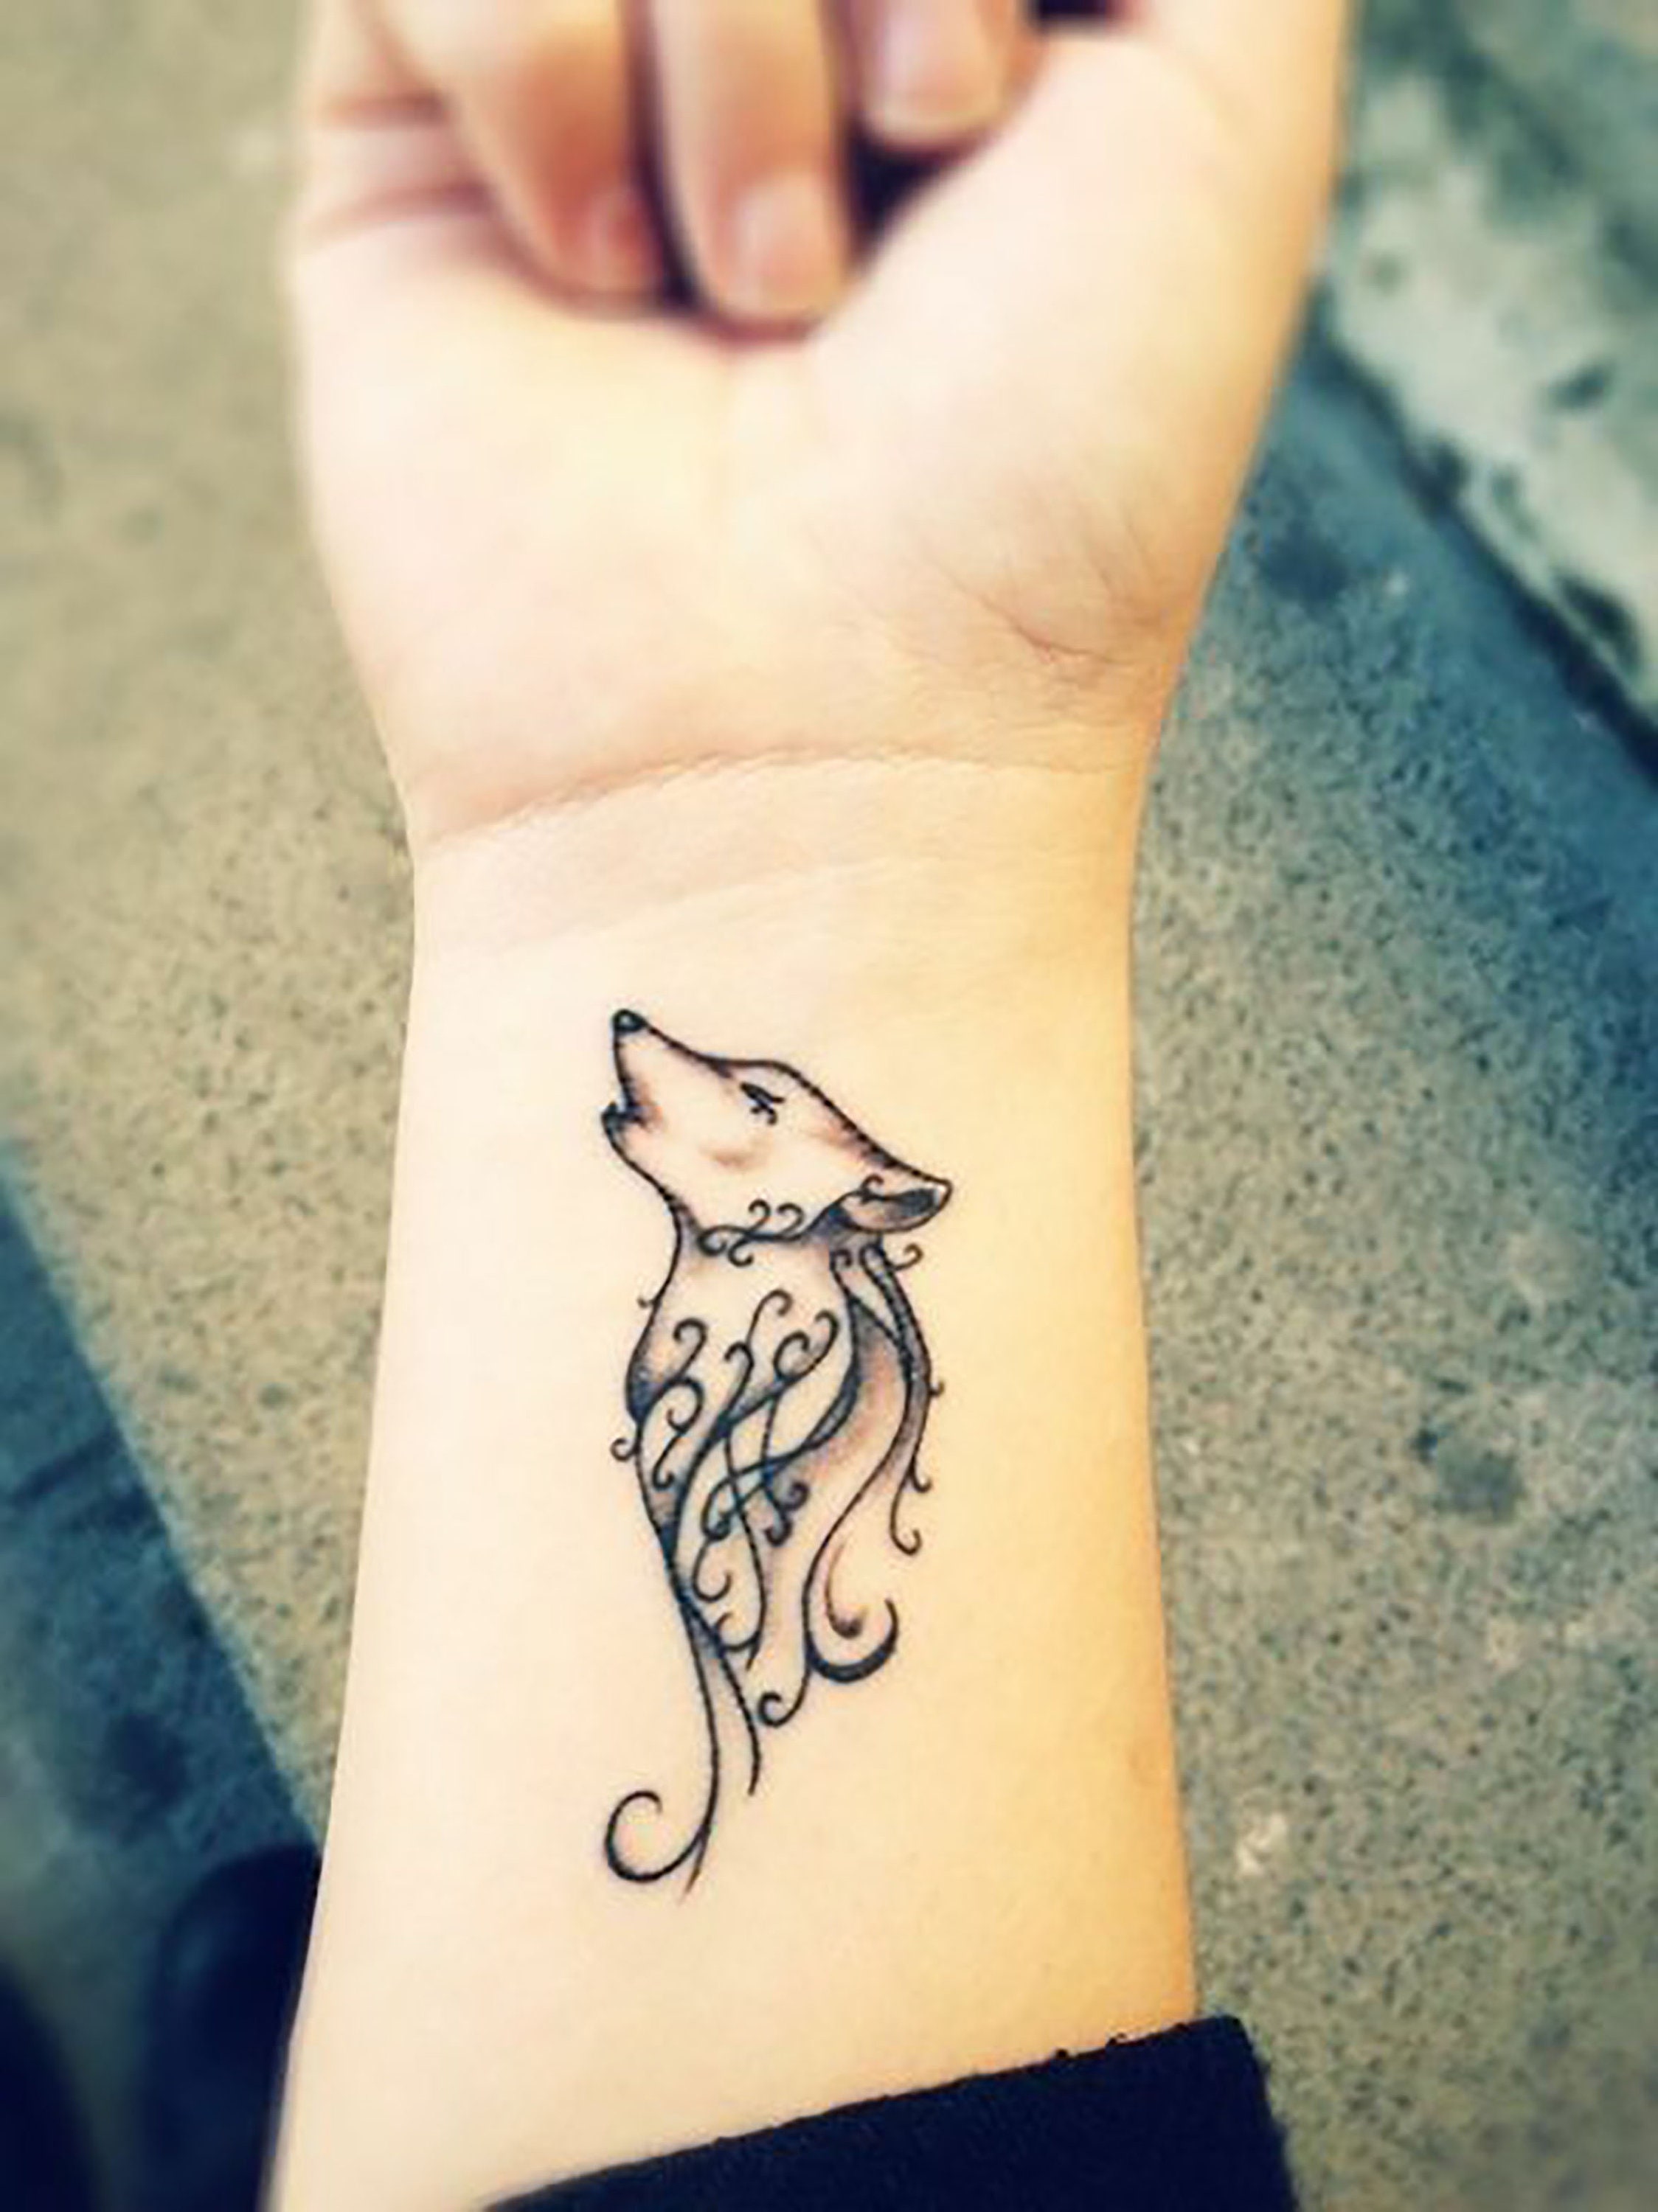 Waterproof Temporary Tattoo Sticker Animal Wolf Lion Eagle Tatto Flash  Tatoo Hand Wrist Foot Arm Neck Fake Tattoos For Men Women From Mart05,  $3.62 | DHgate.Com